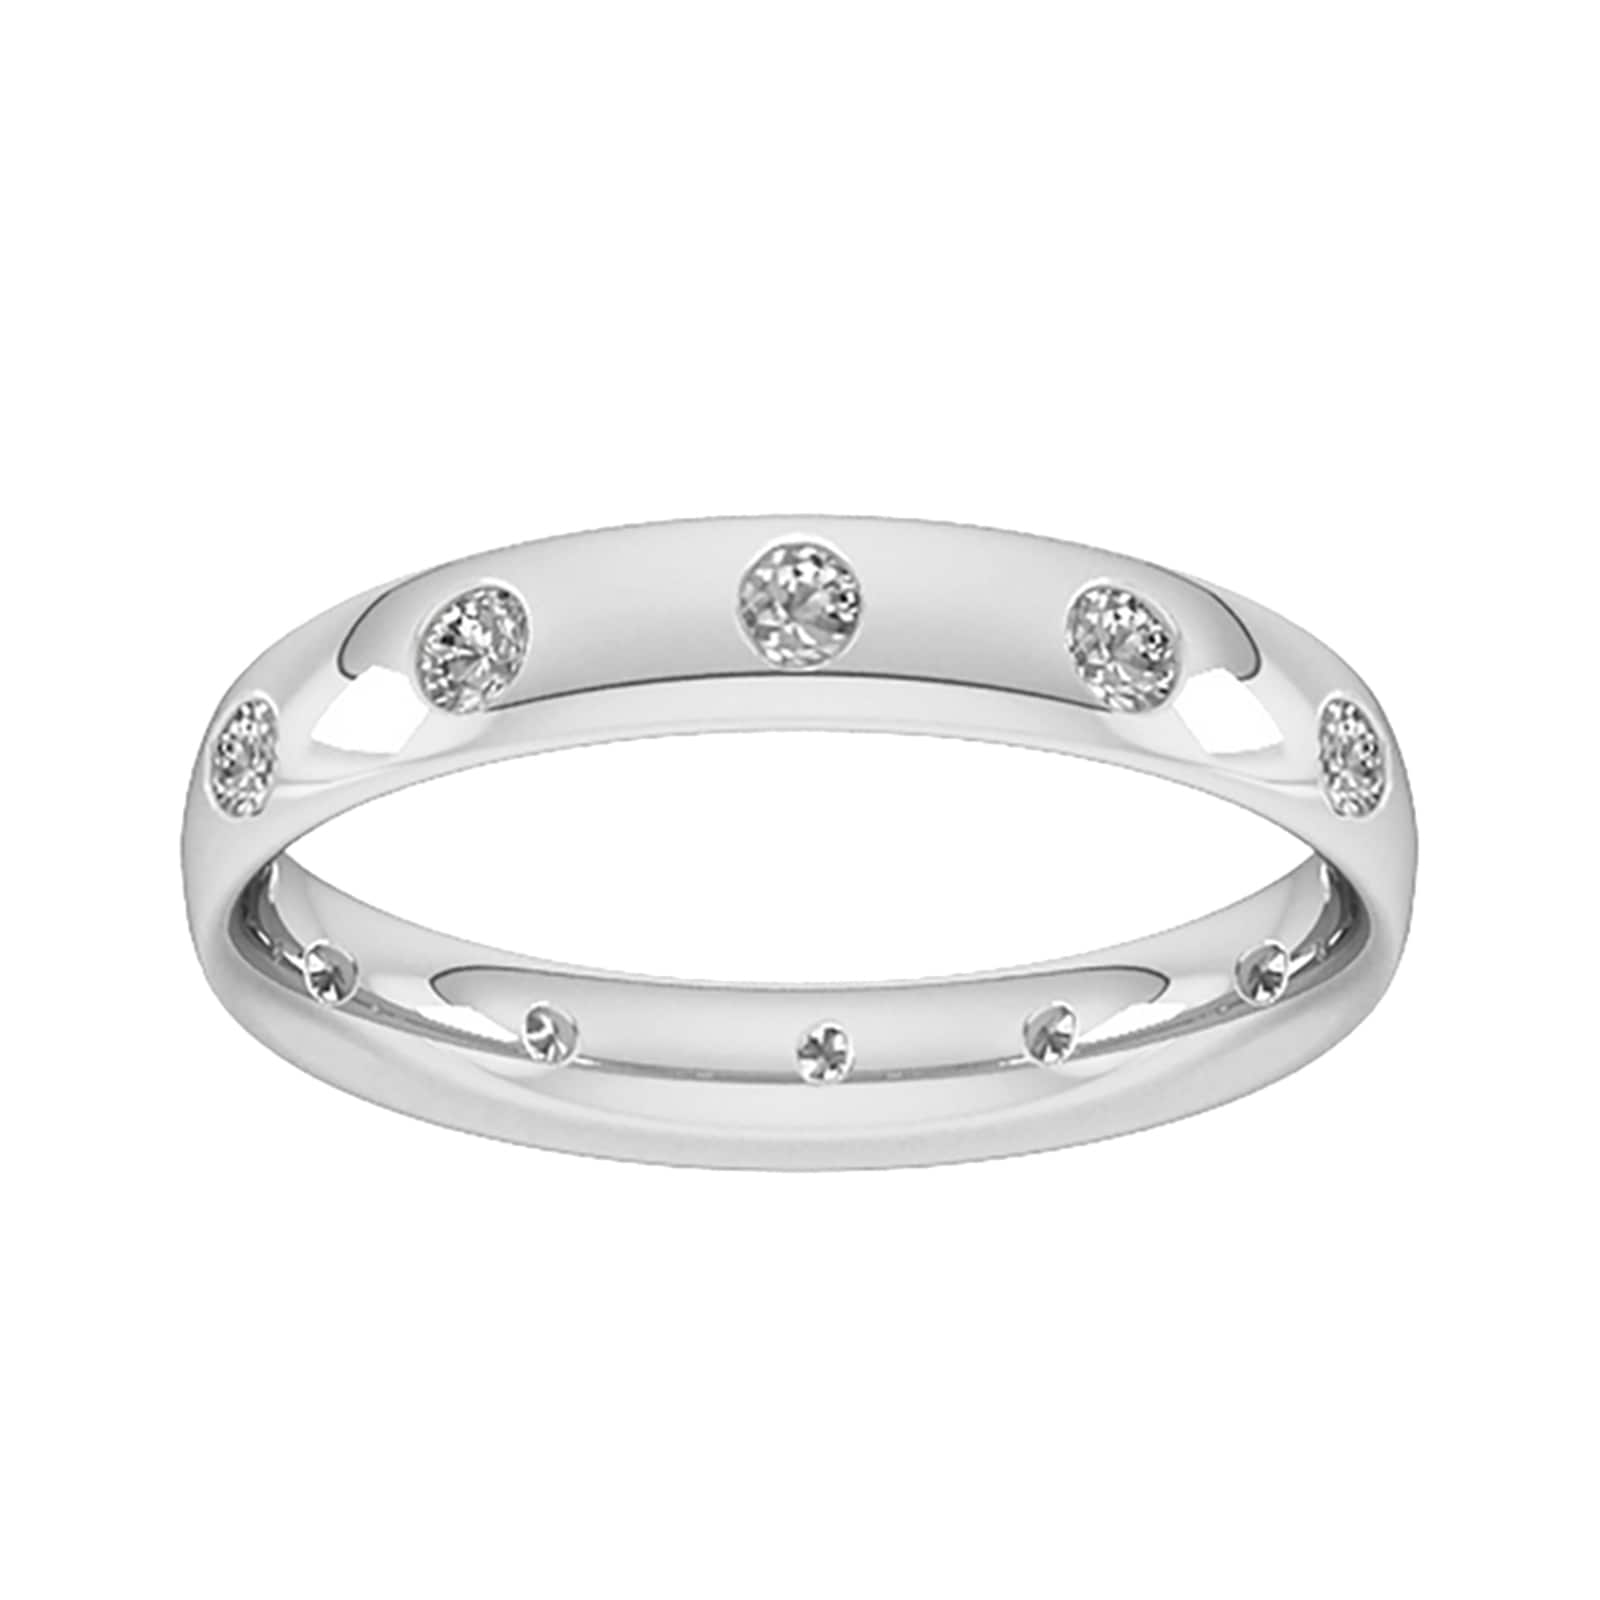 3mm 0.33 Carat Total Weight Twelve Stone Brilliant Cut Rub Over Diamond Set Wedding Ring In 18 Carat White Gold - Ring Size J